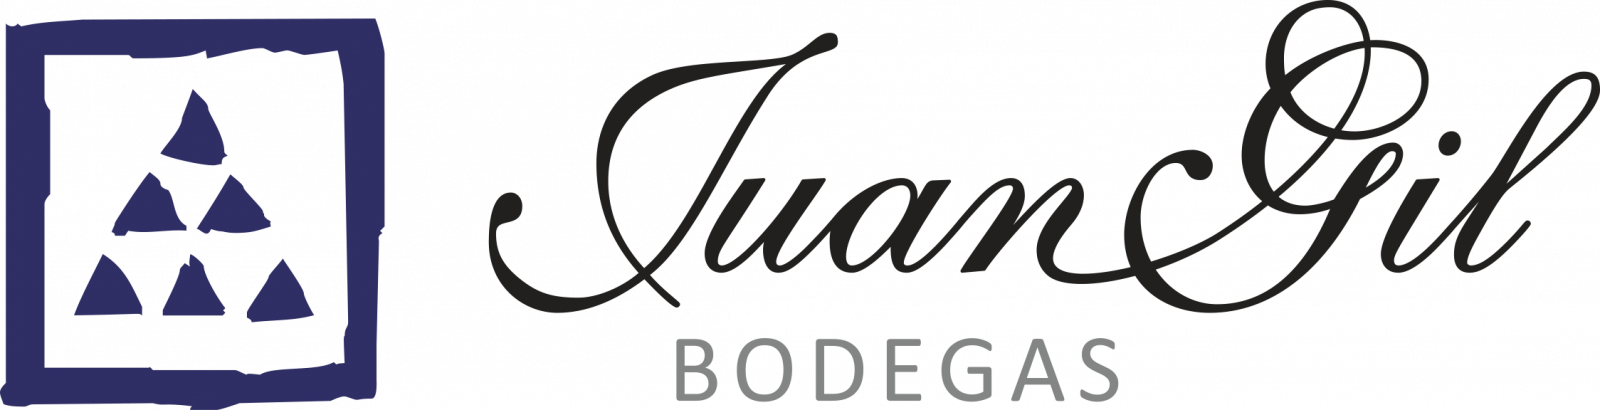 Bodegas Juan Gil logo_wineaffair